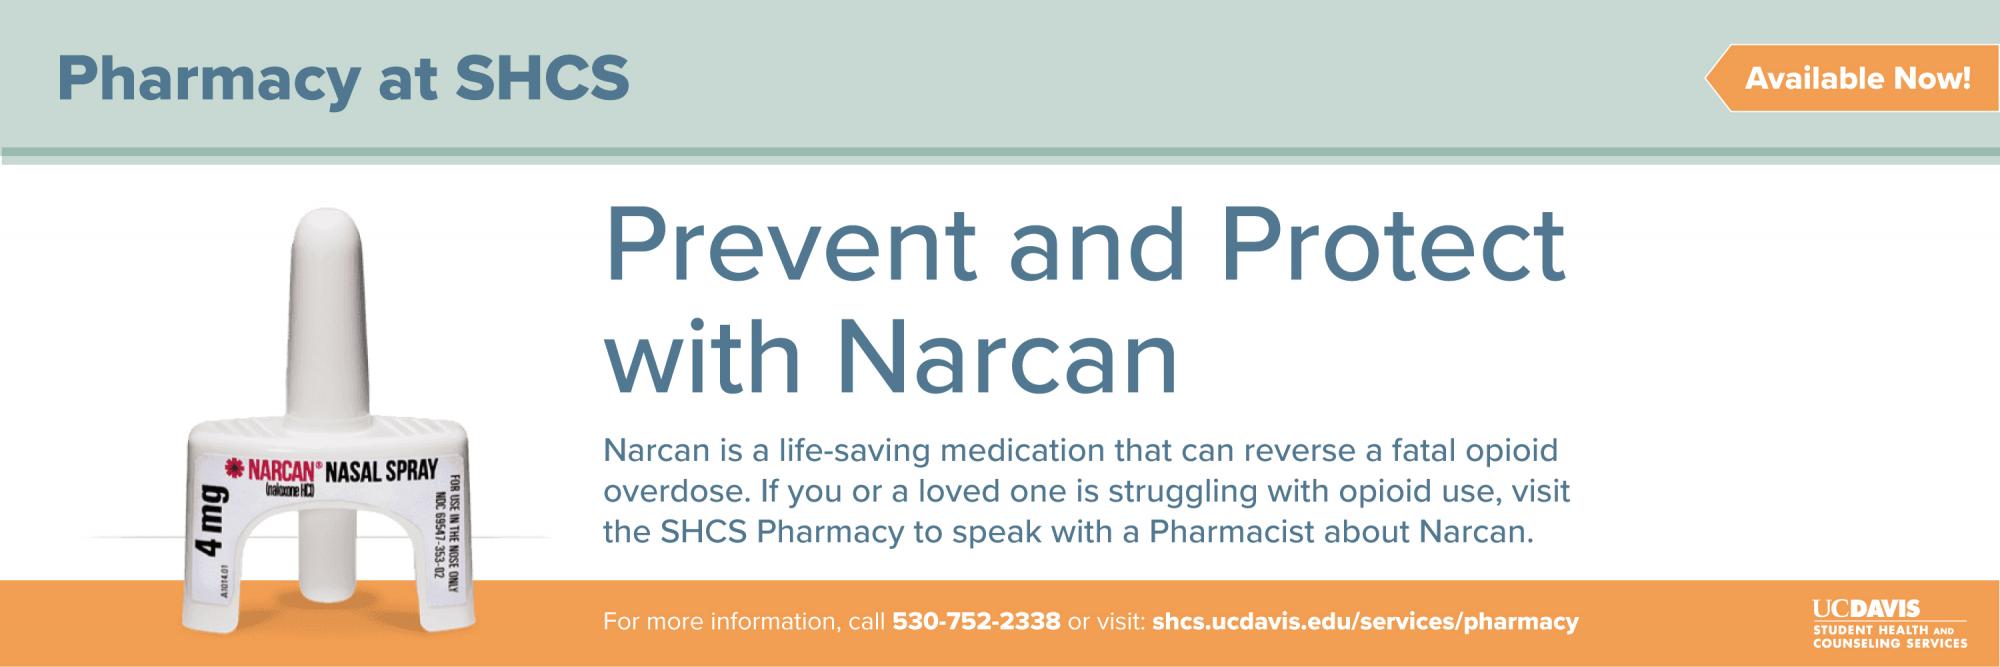 Naloxone/Narcan banner